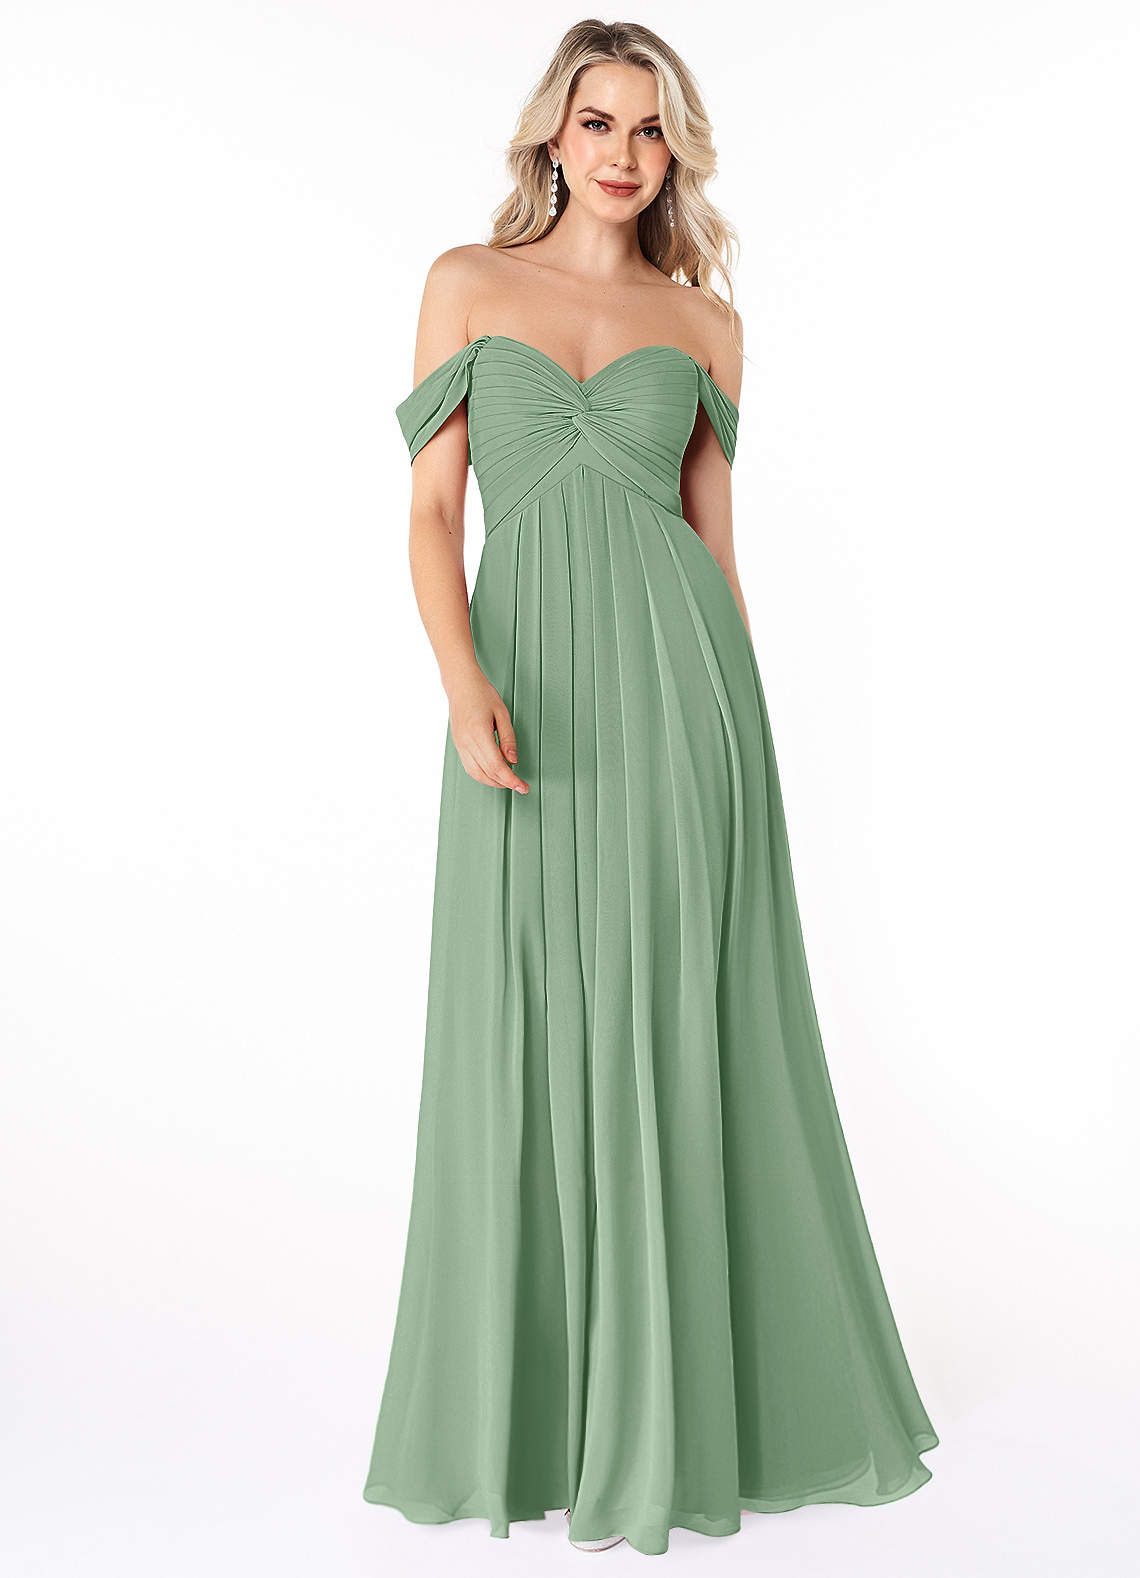 Matcha Kaitlynn Try-on Dress Sample Dress Bridesmaid Dresses | Azazie